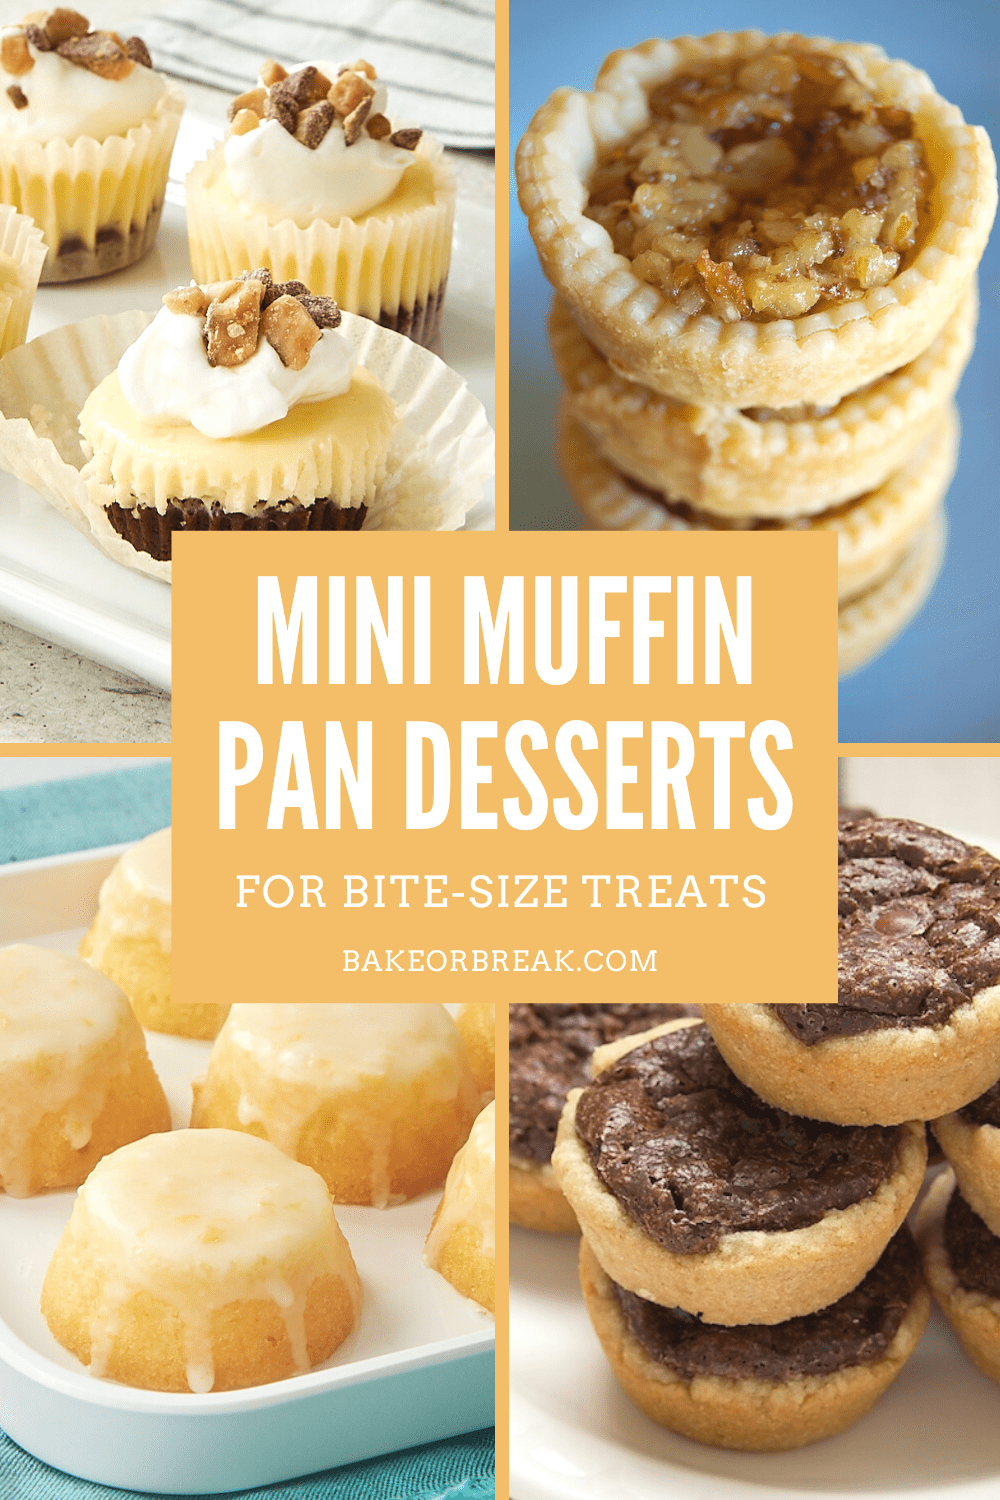 https://bakeorbreak.com/wp-content/uploads/2021/07/mini_muffin_pan_desserts_P3.png